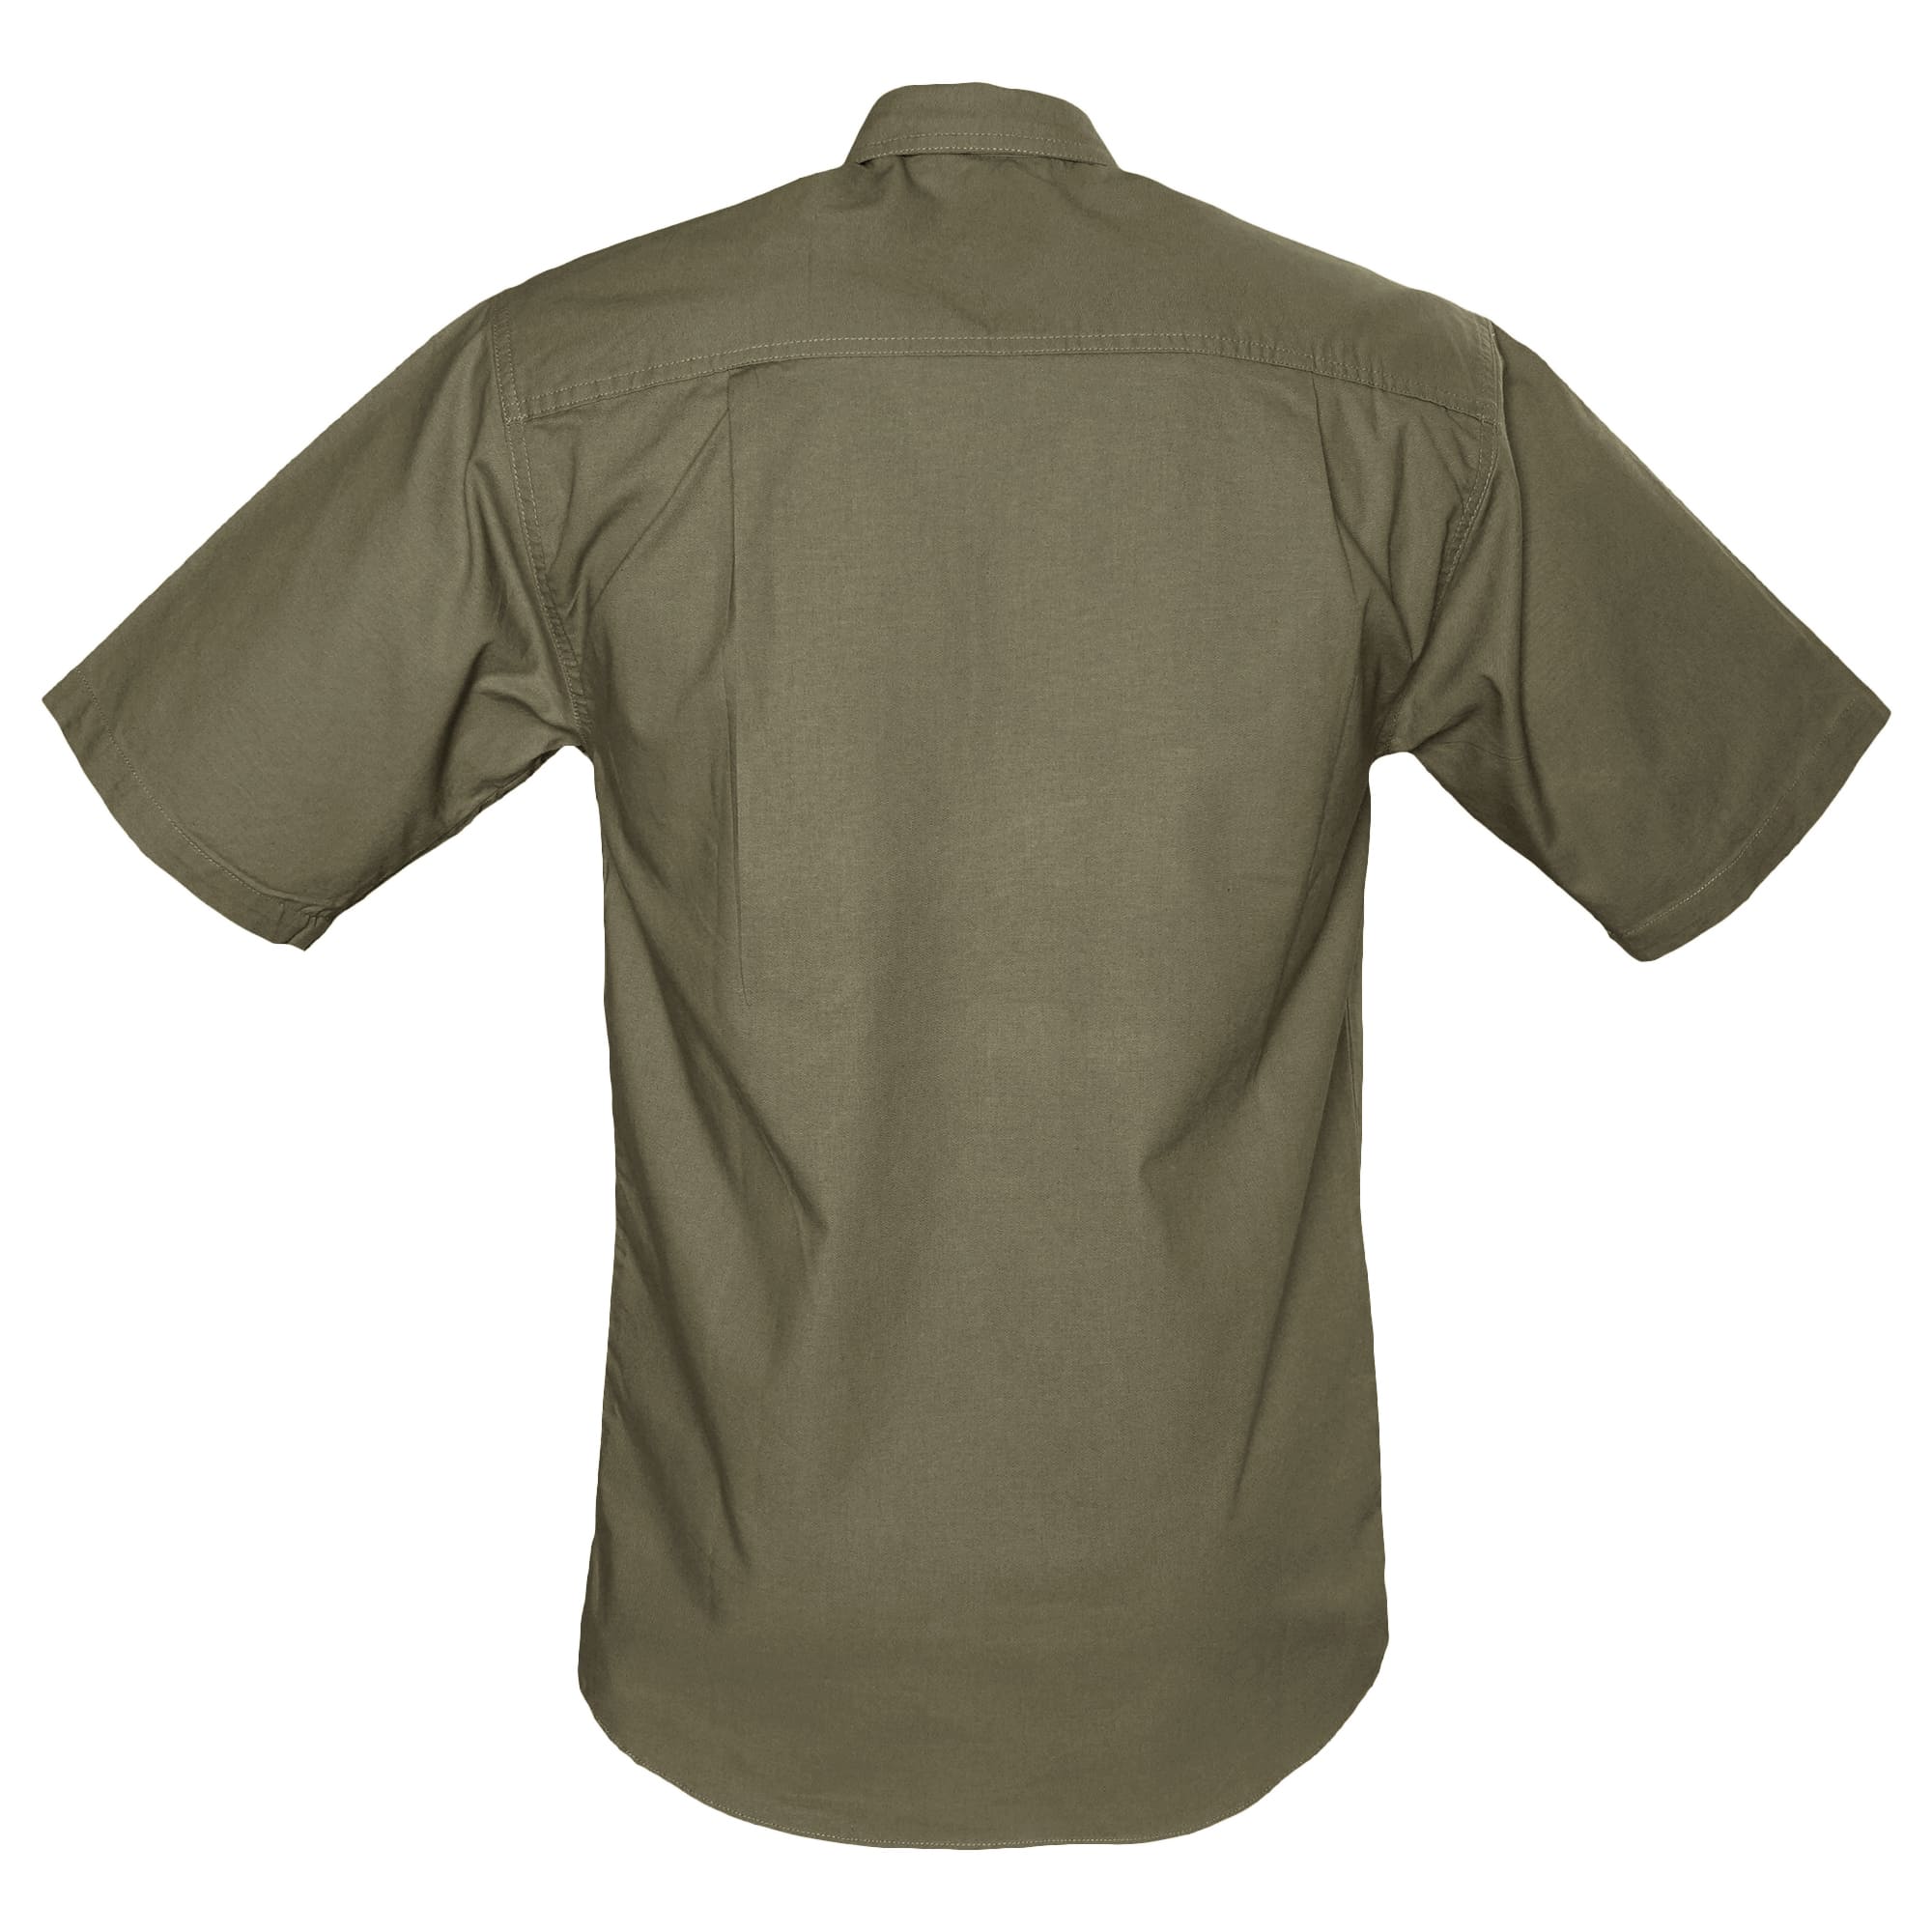 Tag Safari Men's Trail Short Sleeve Shirt W Chest Pockets (Khaki, Small)